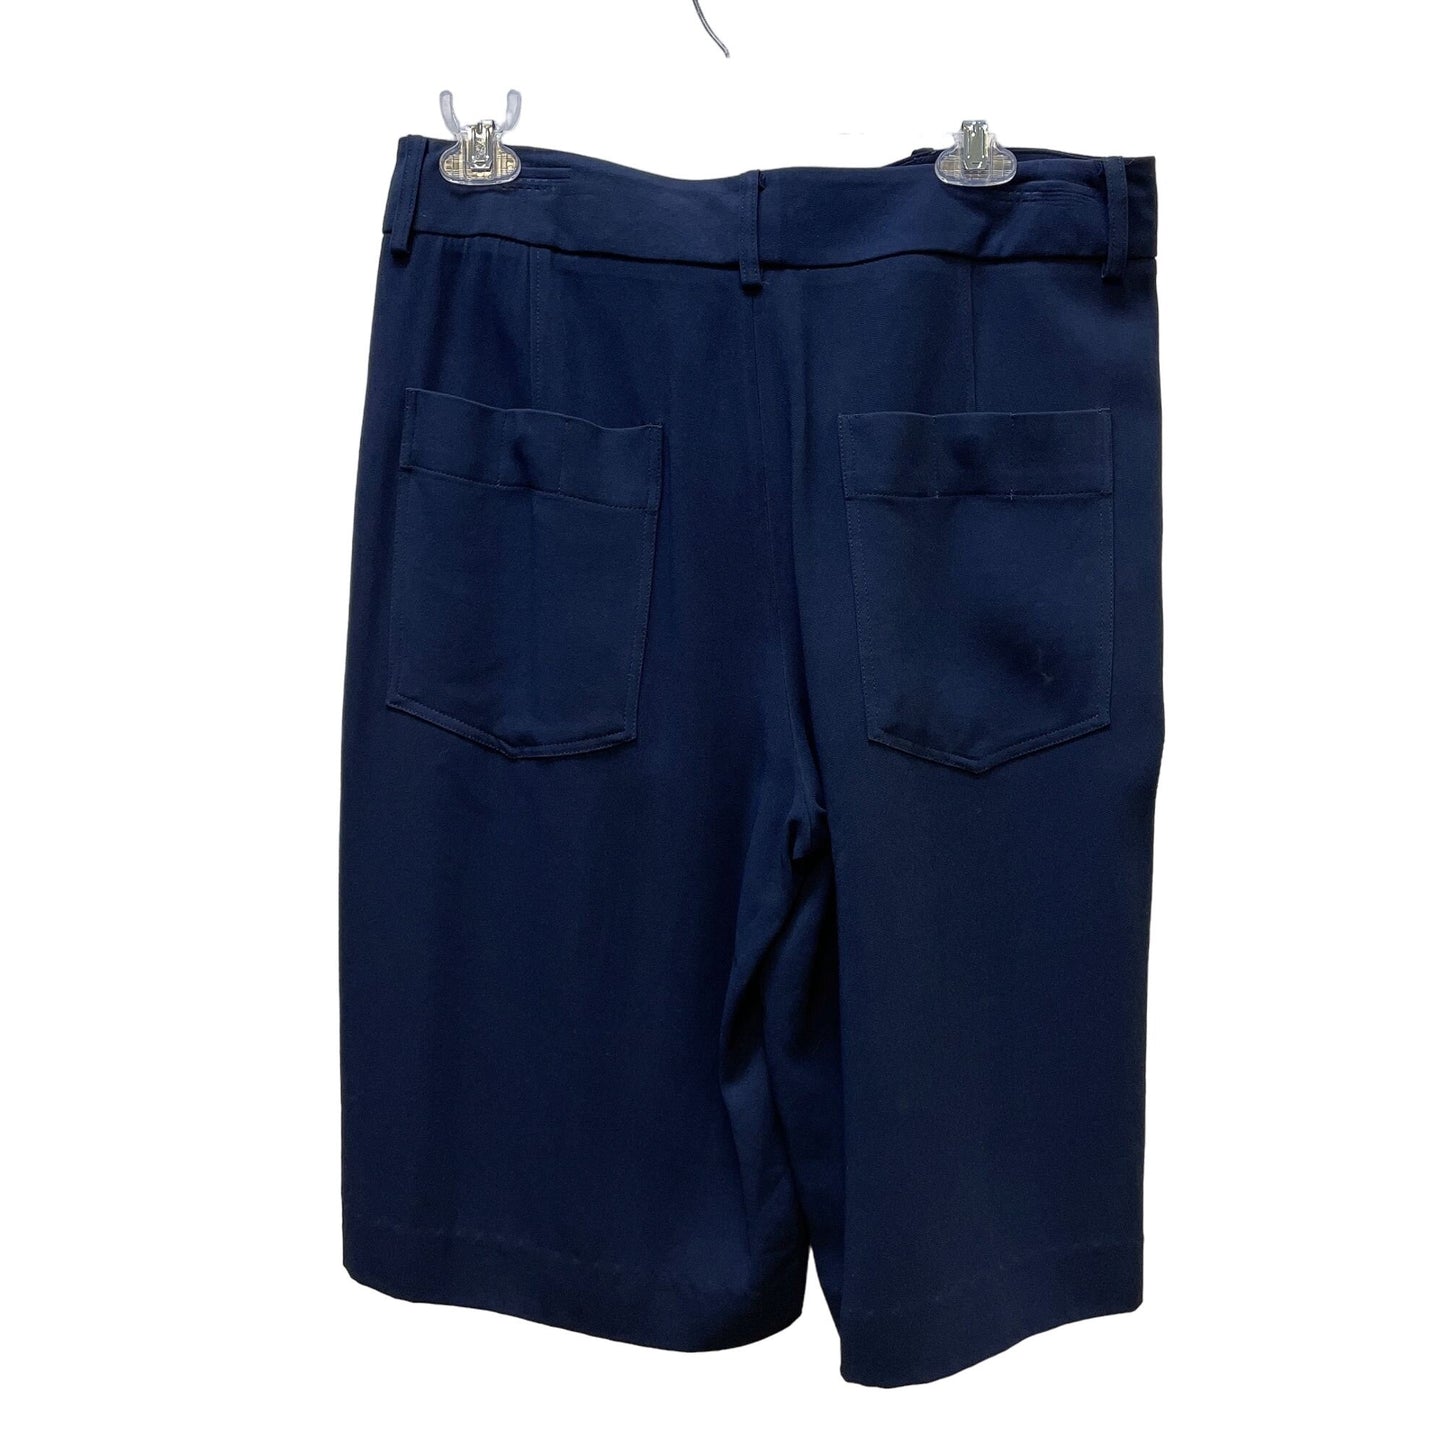 *NWD Helmut Lang Navy Uniform Shorts Size 6